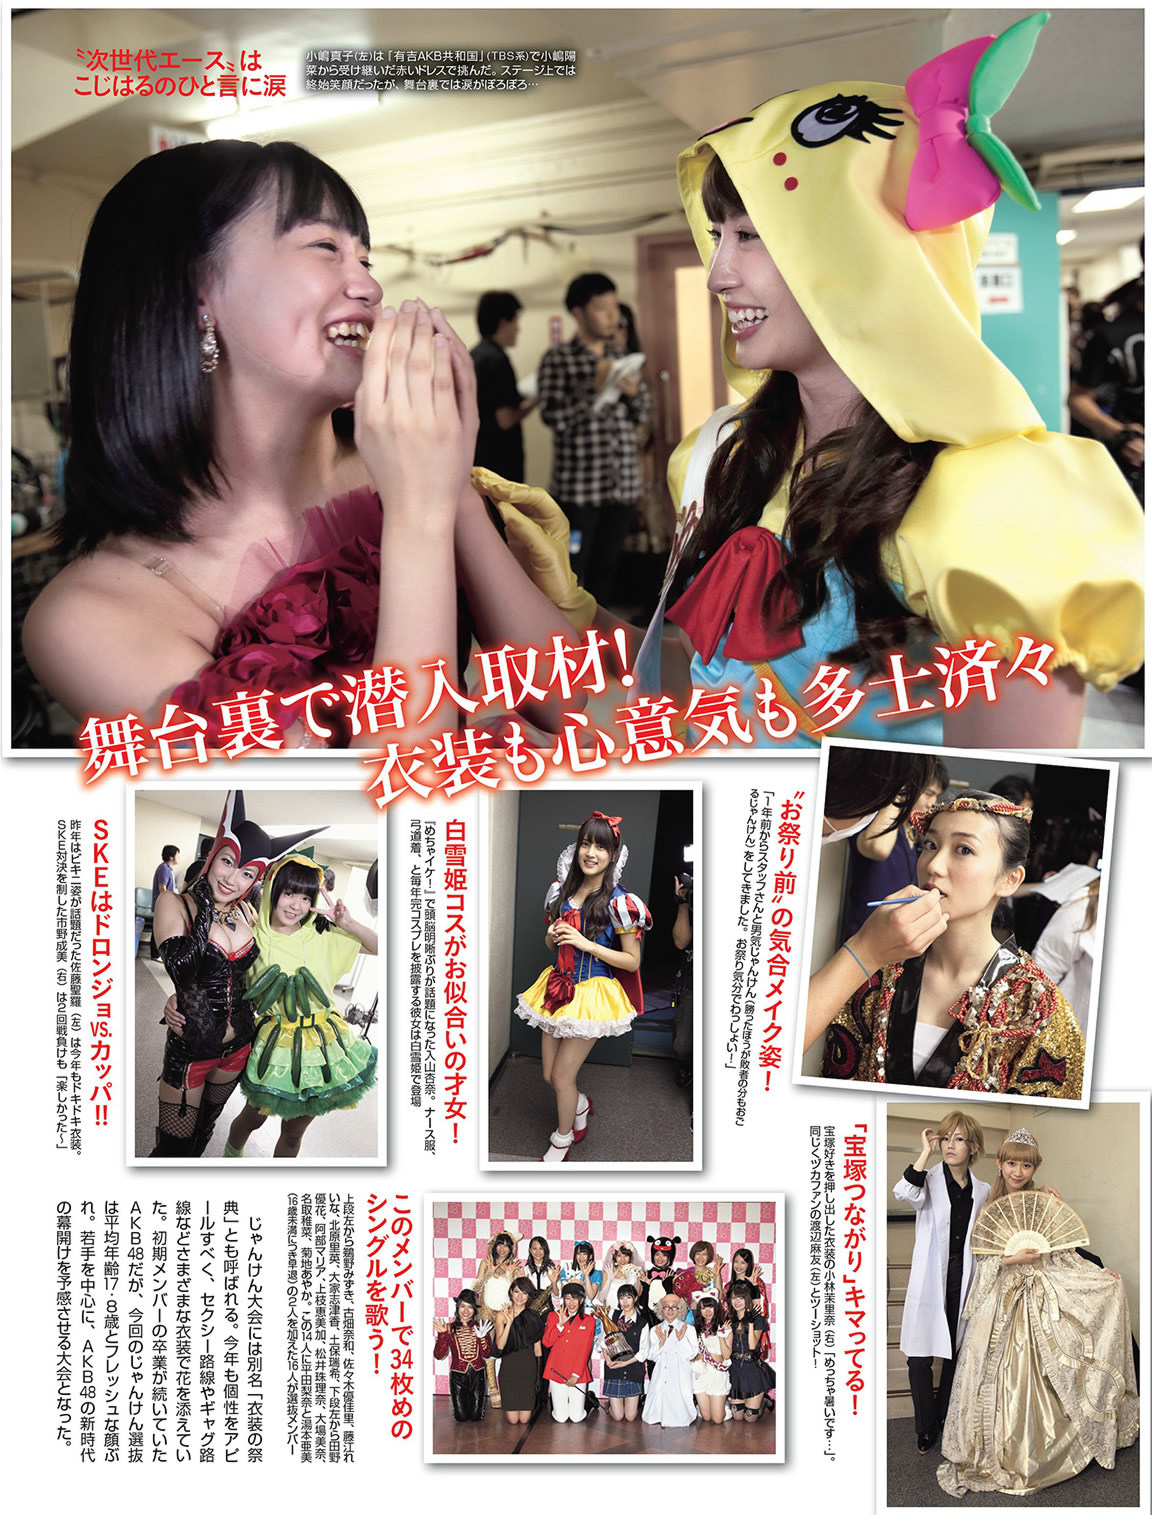 AKB48じゃんけん大会2013 FLASH 2013/10.8 - Tumblr Pics